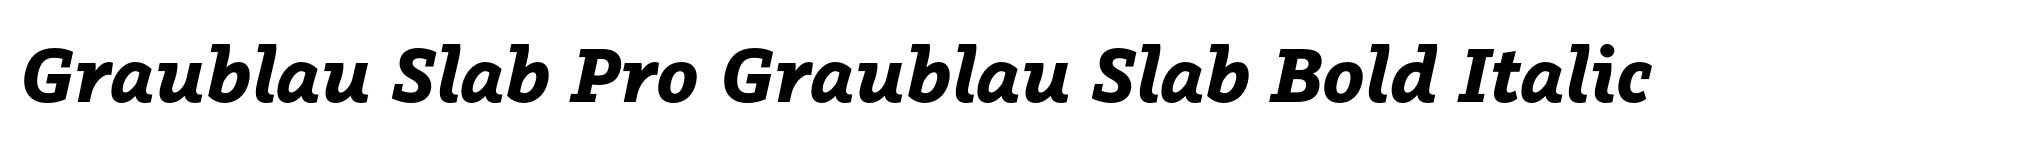 Graublau Slab Pro Graublau Slab Bold Italic image